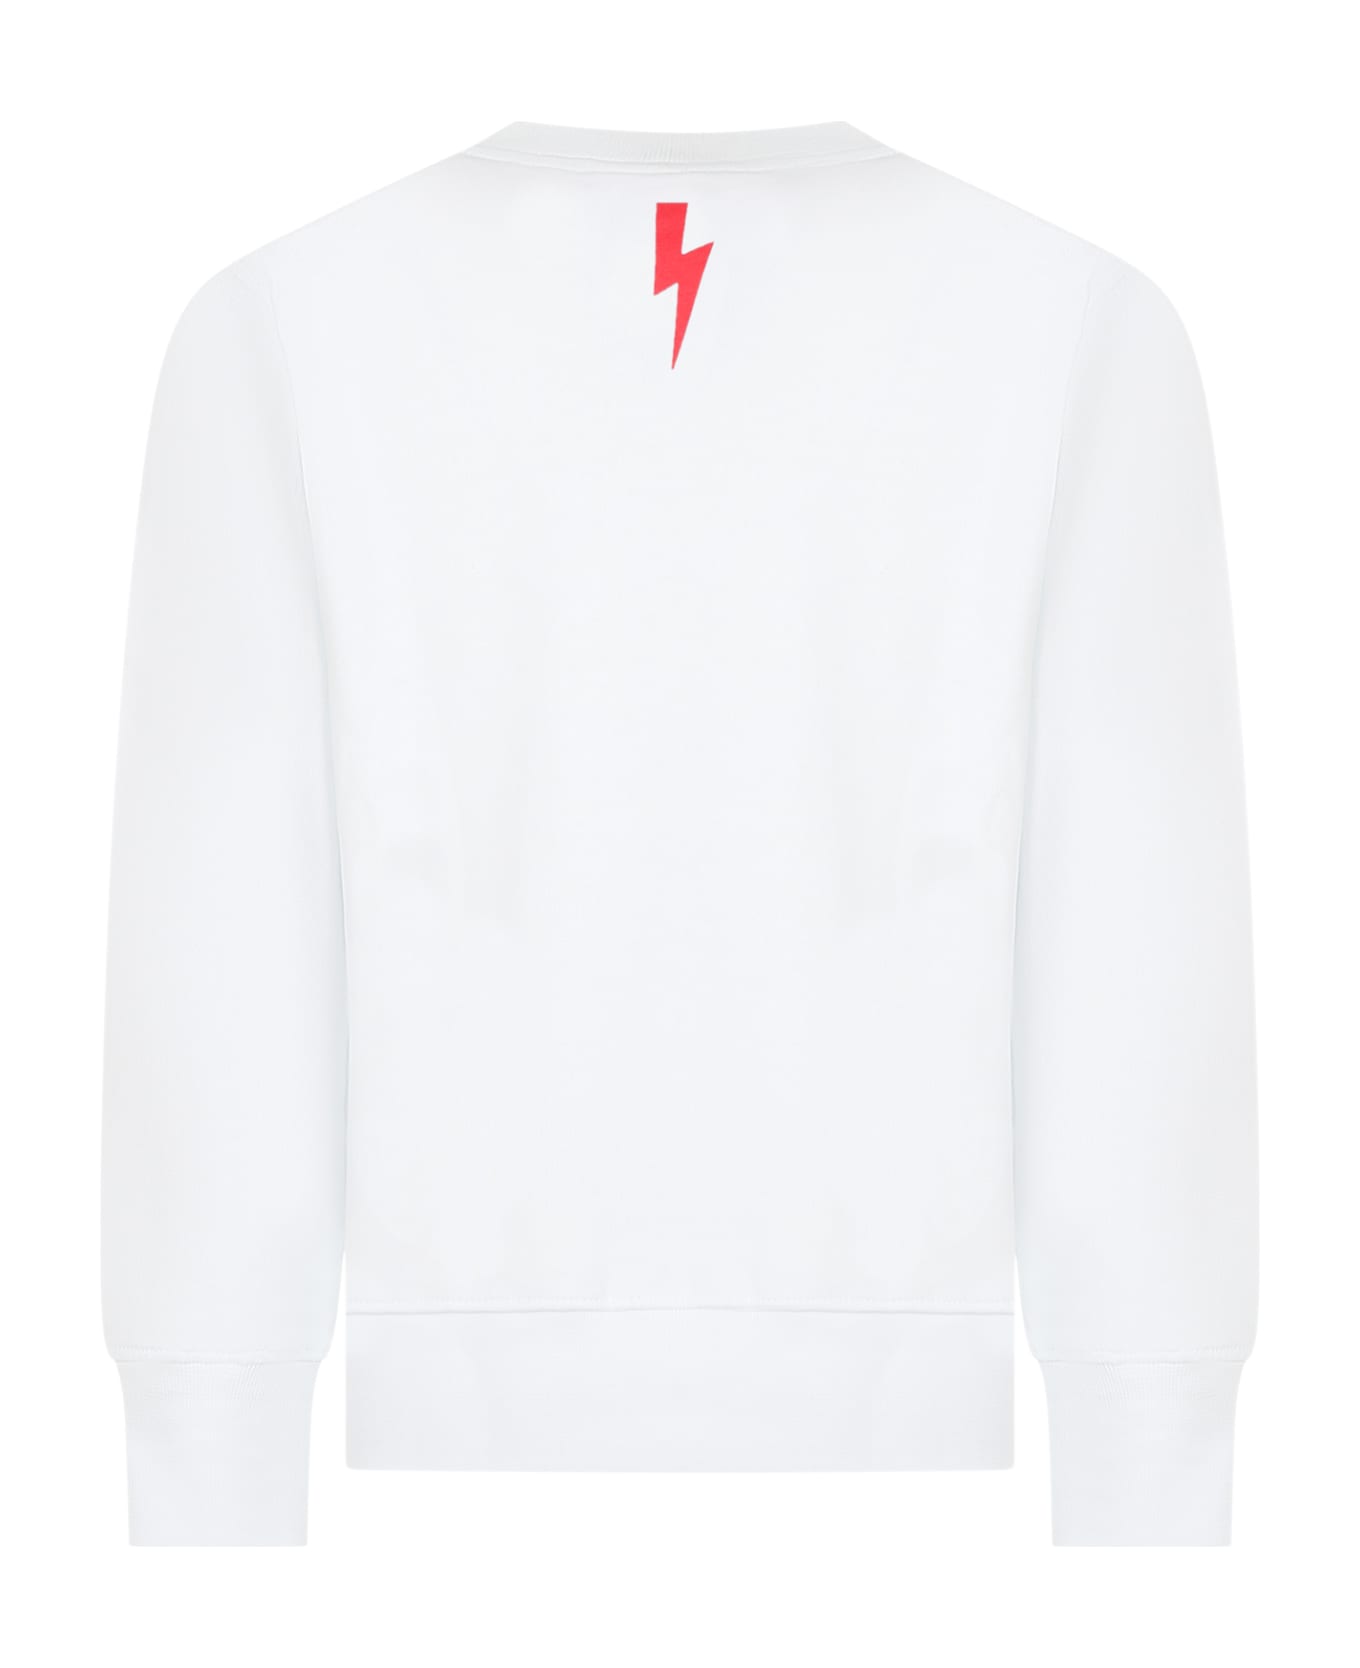 Neil Barrett White Sweatshirt For Boy With Red And White Logo - White